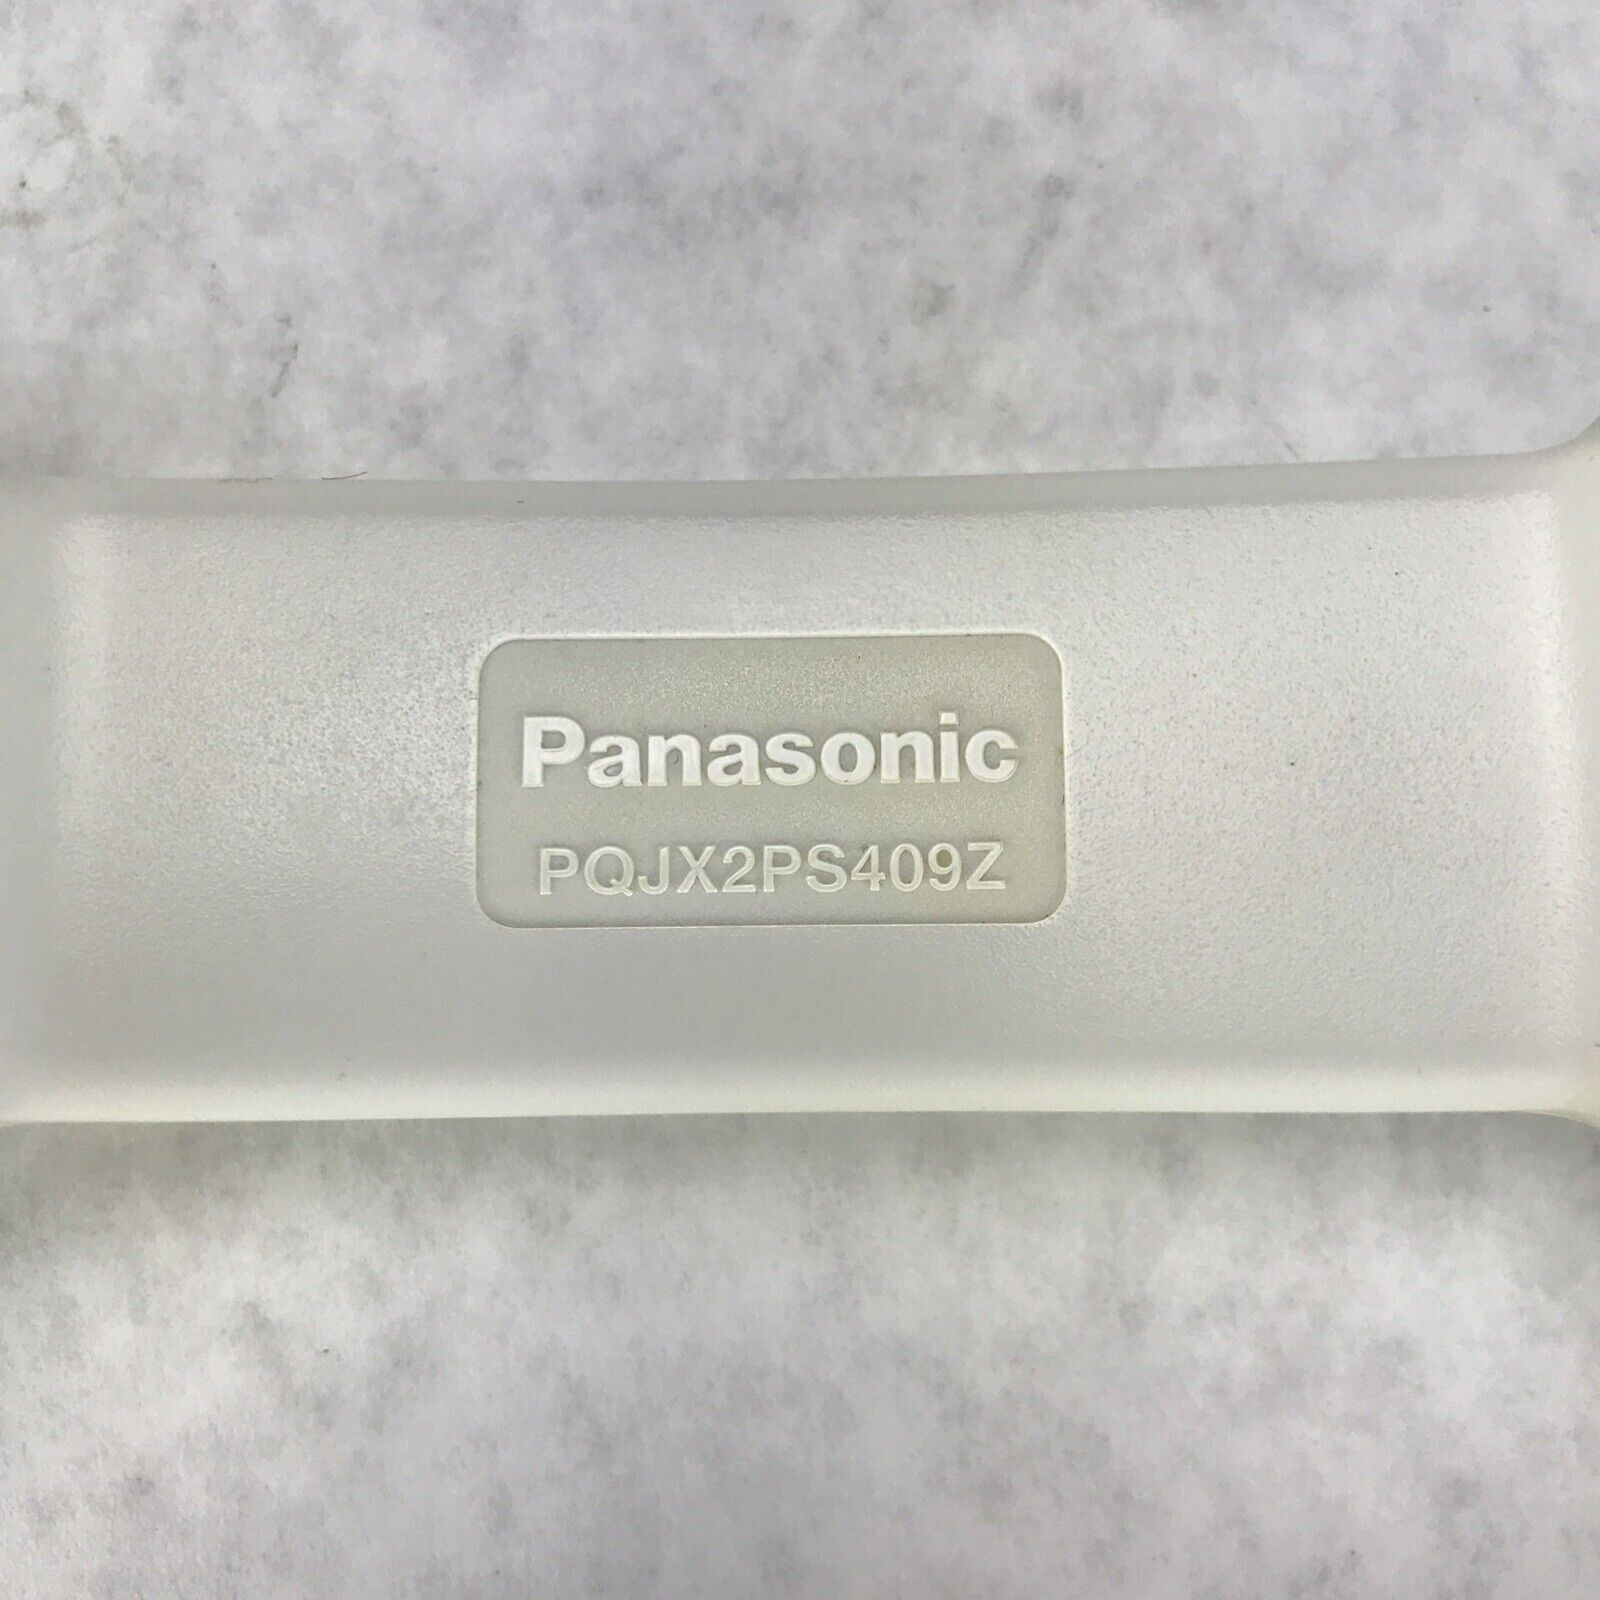 Panasonic Handset KX-T7000 Series Phone White PQJX2PS409Z